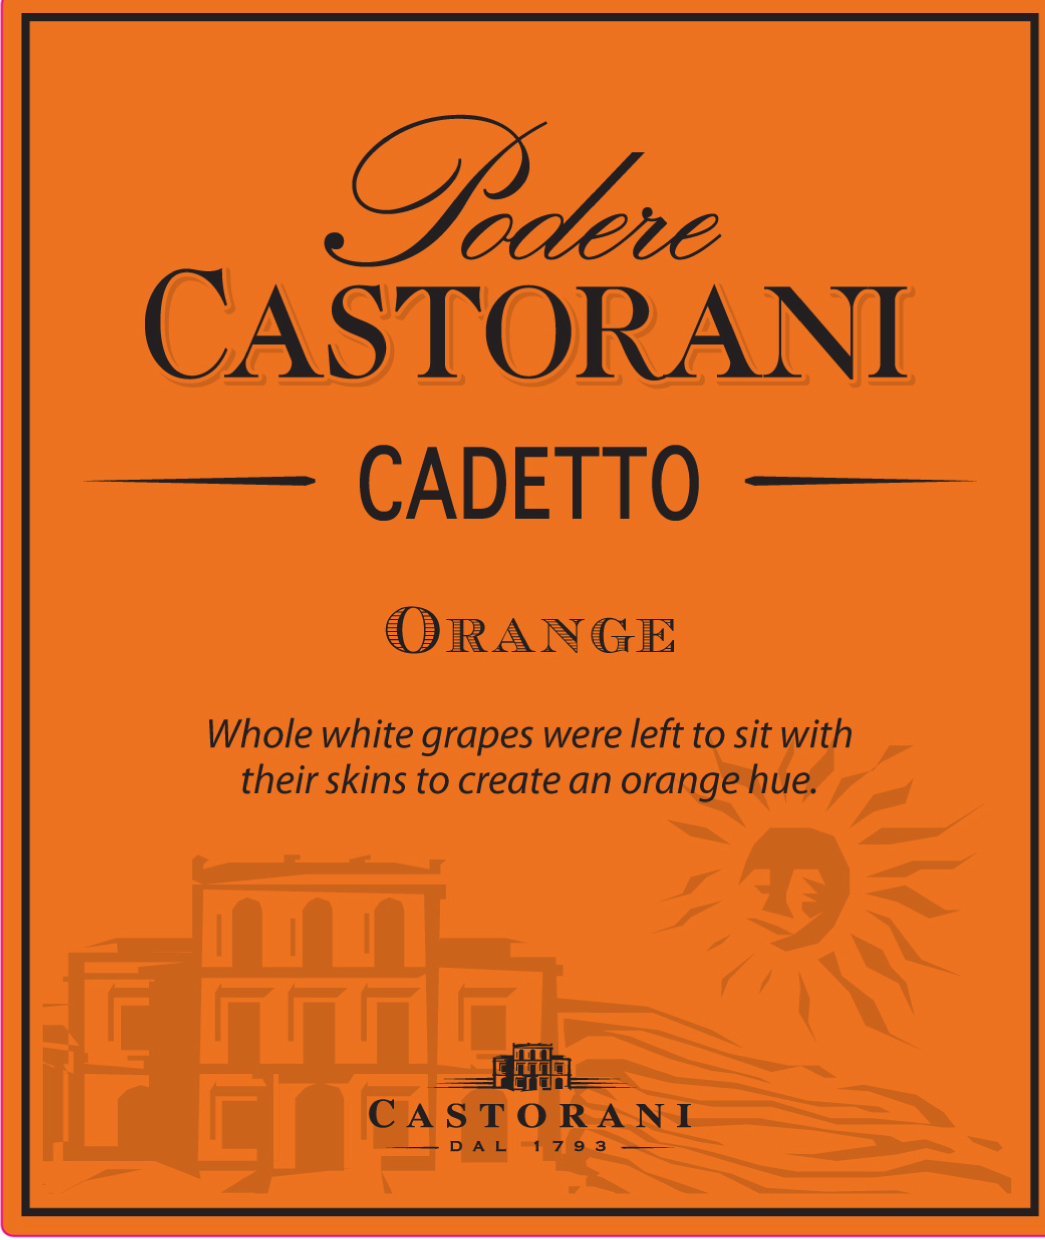 Podere Castorani - Cadetto Orange label